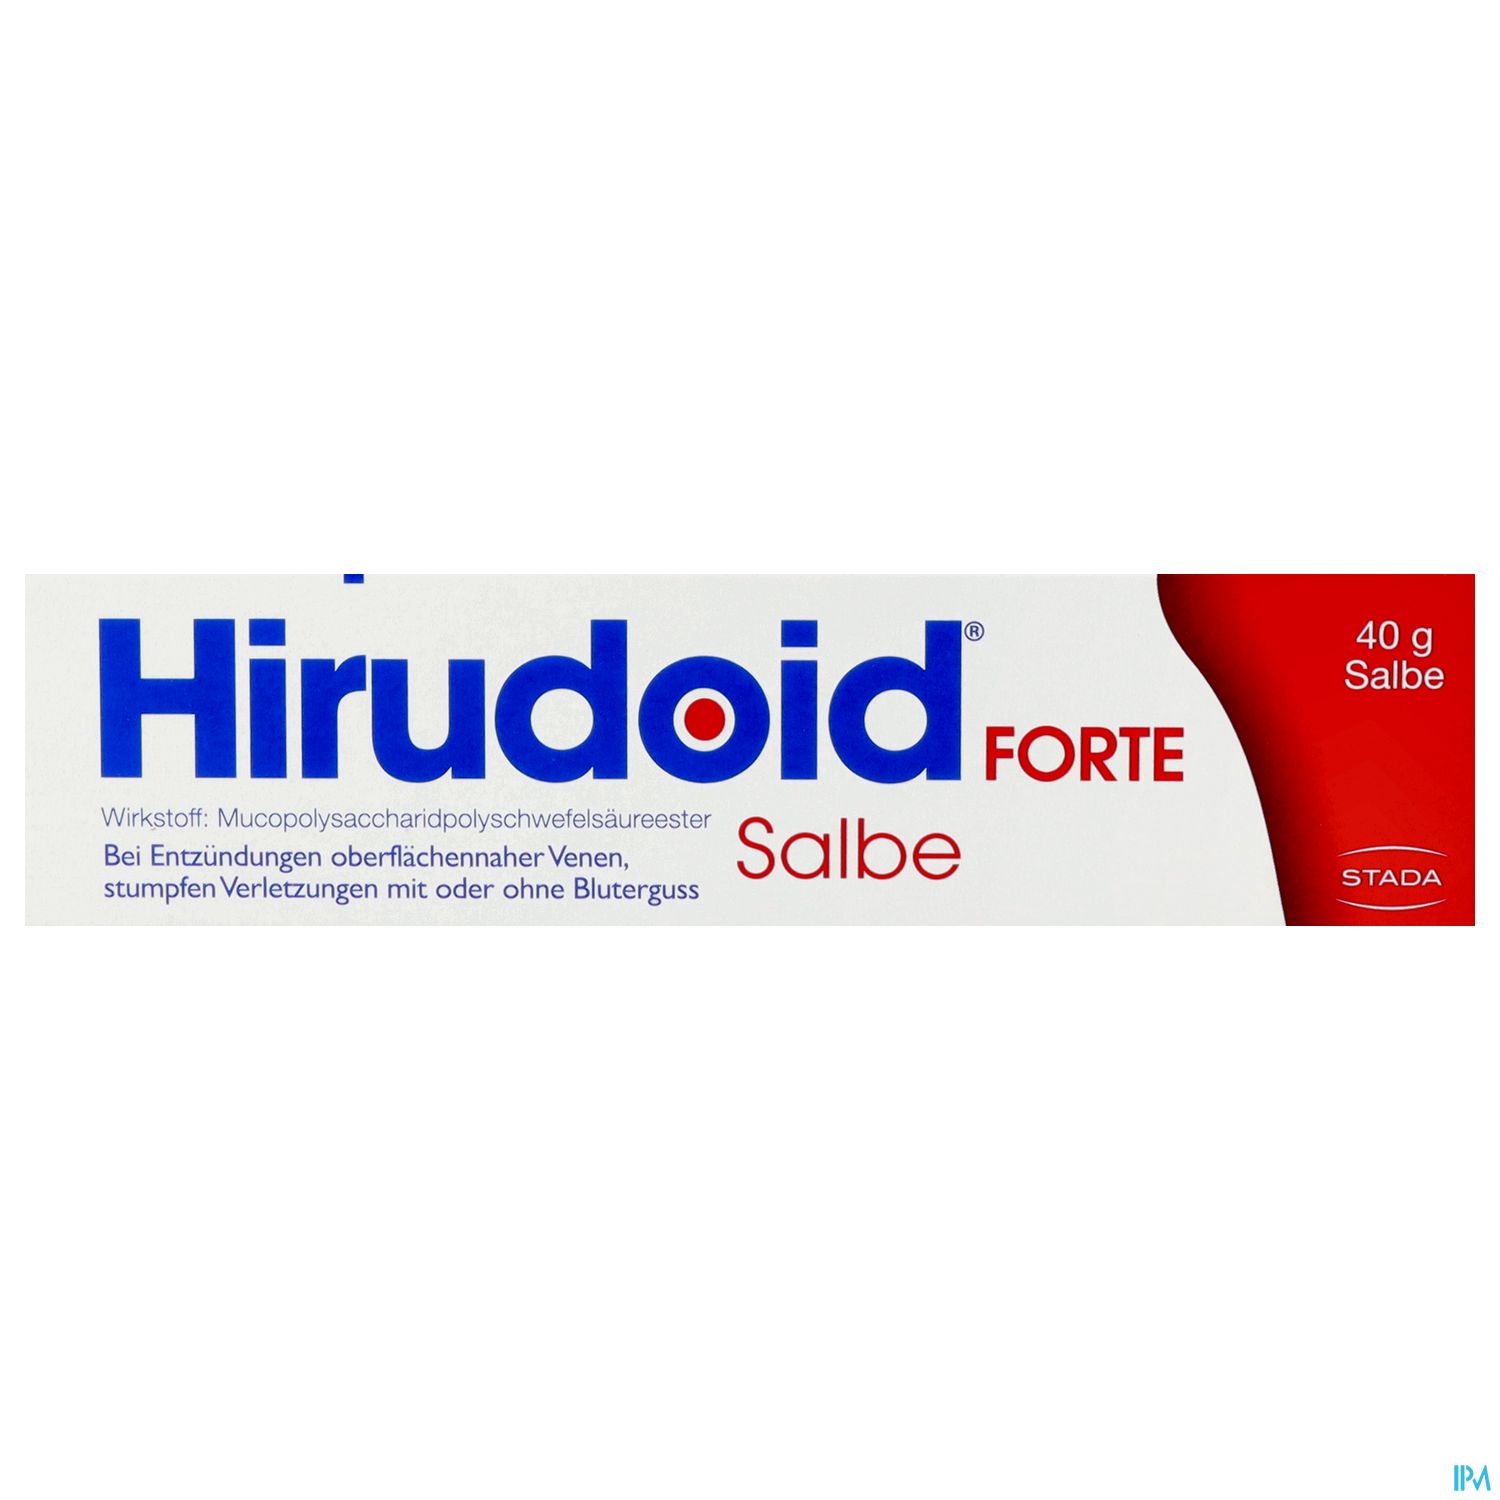 Hirudoid forte - Salbe